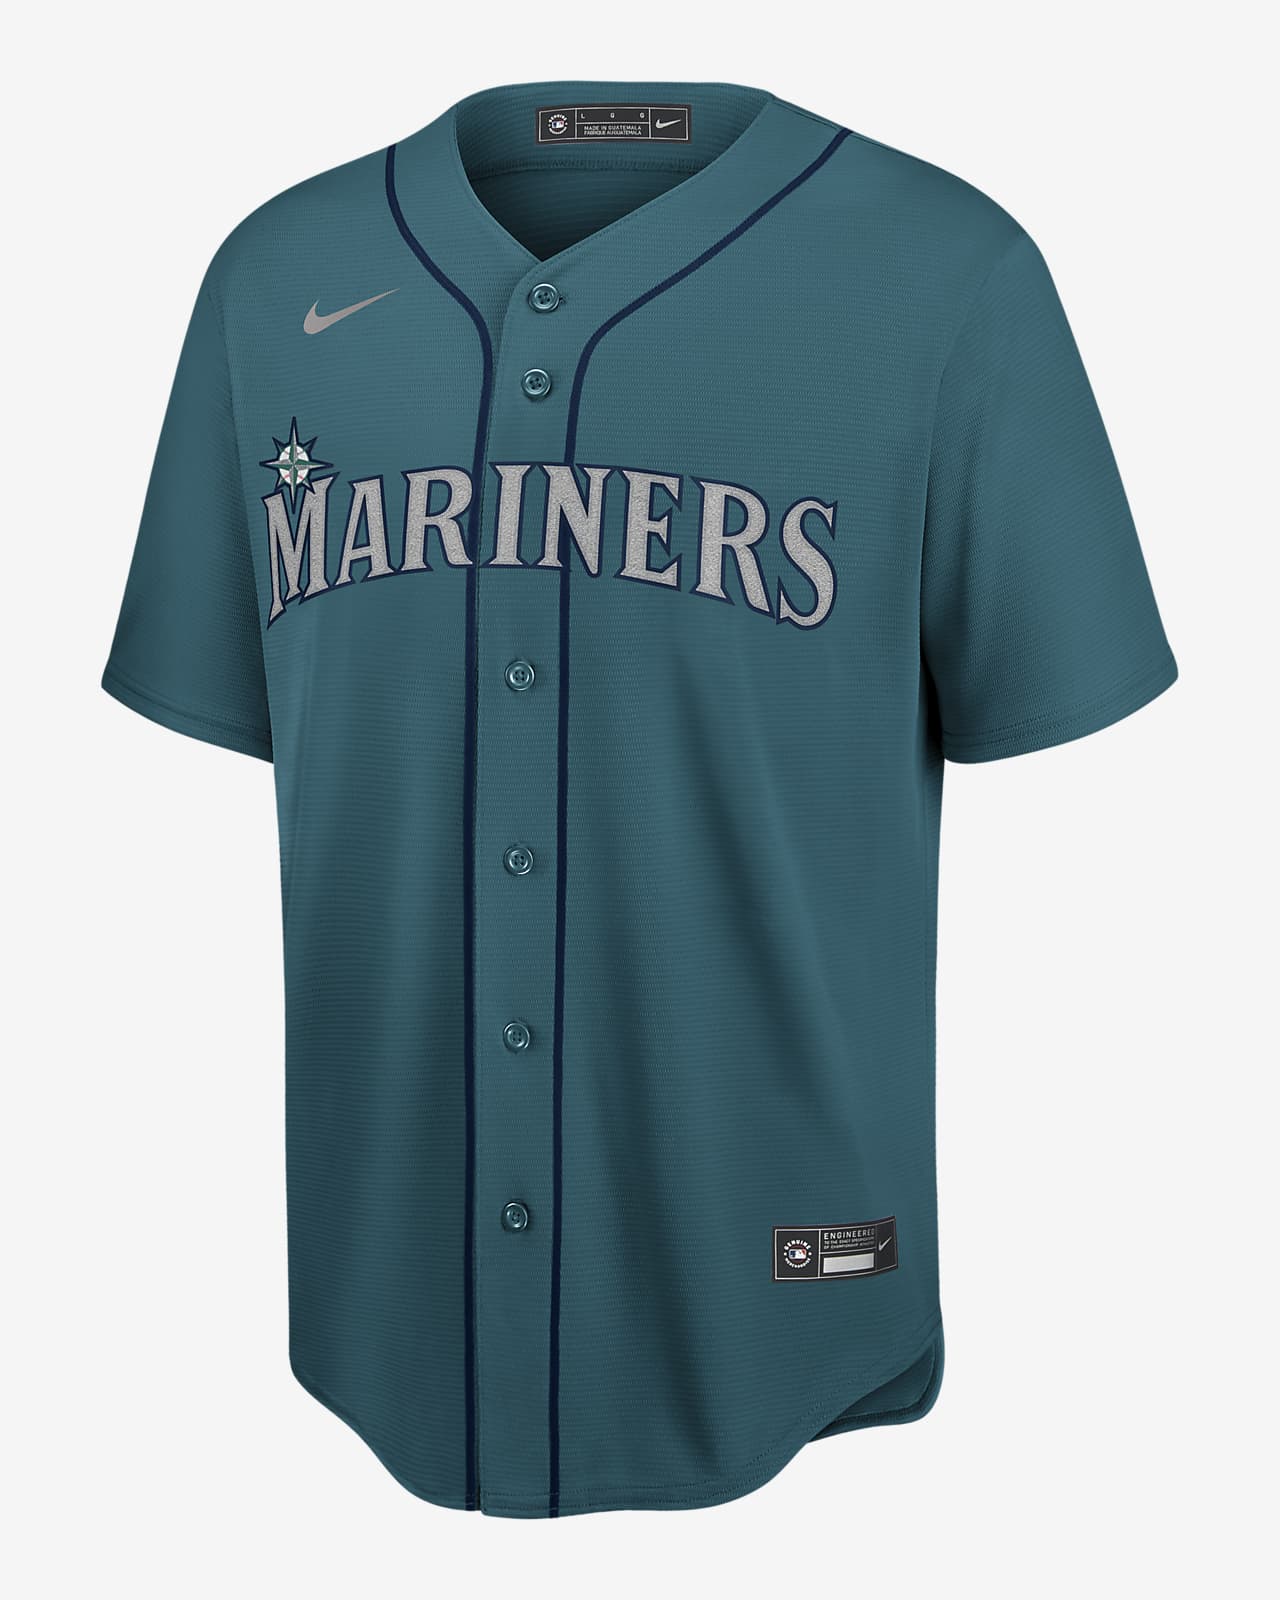 MLB Seattle Mariners (Mitch Haniger) Men's Replica Baseball Jersey.